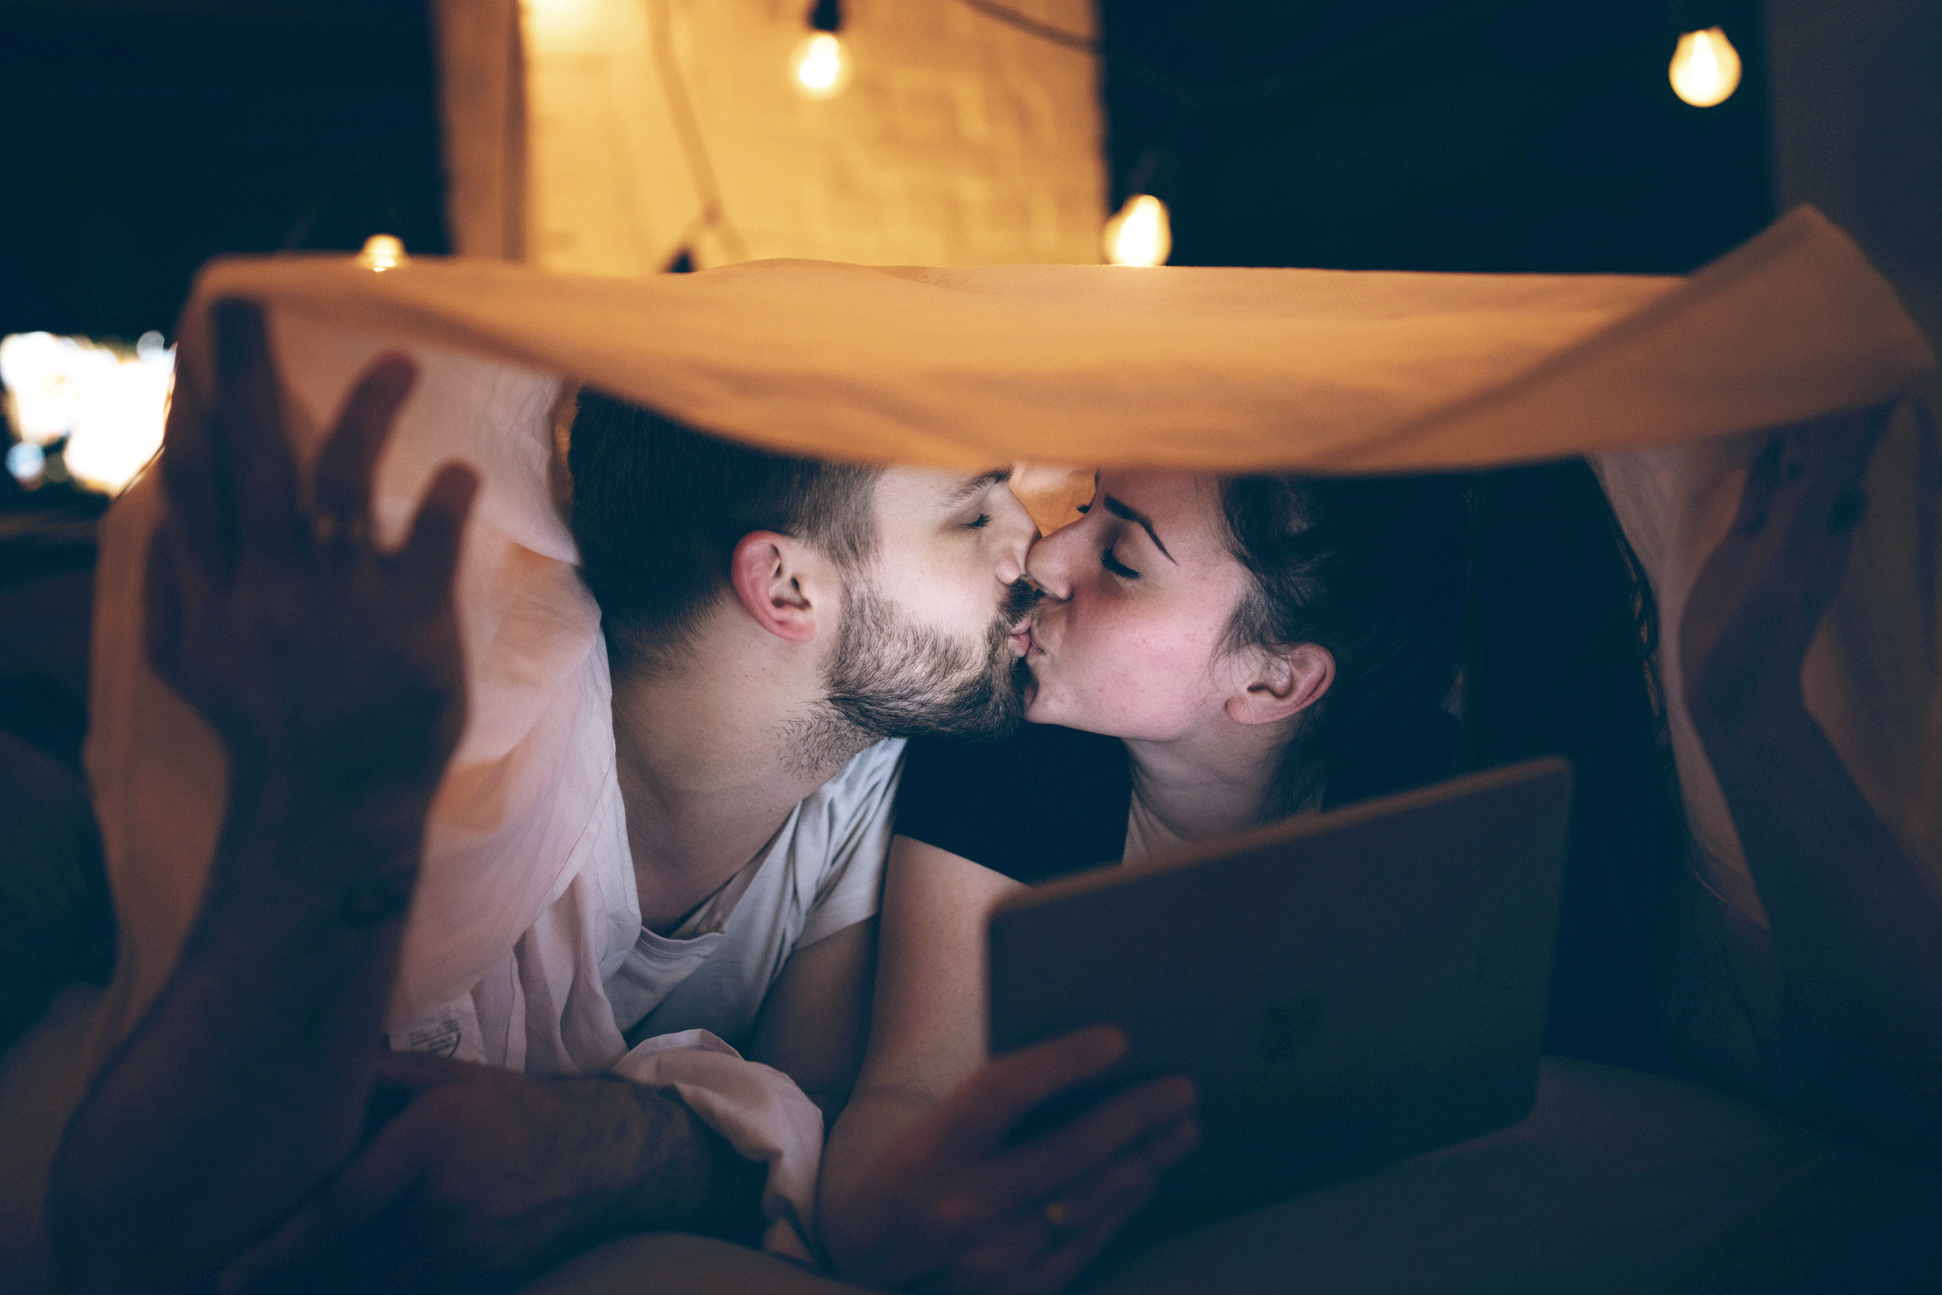 dave erlandson share kissing sex games photos